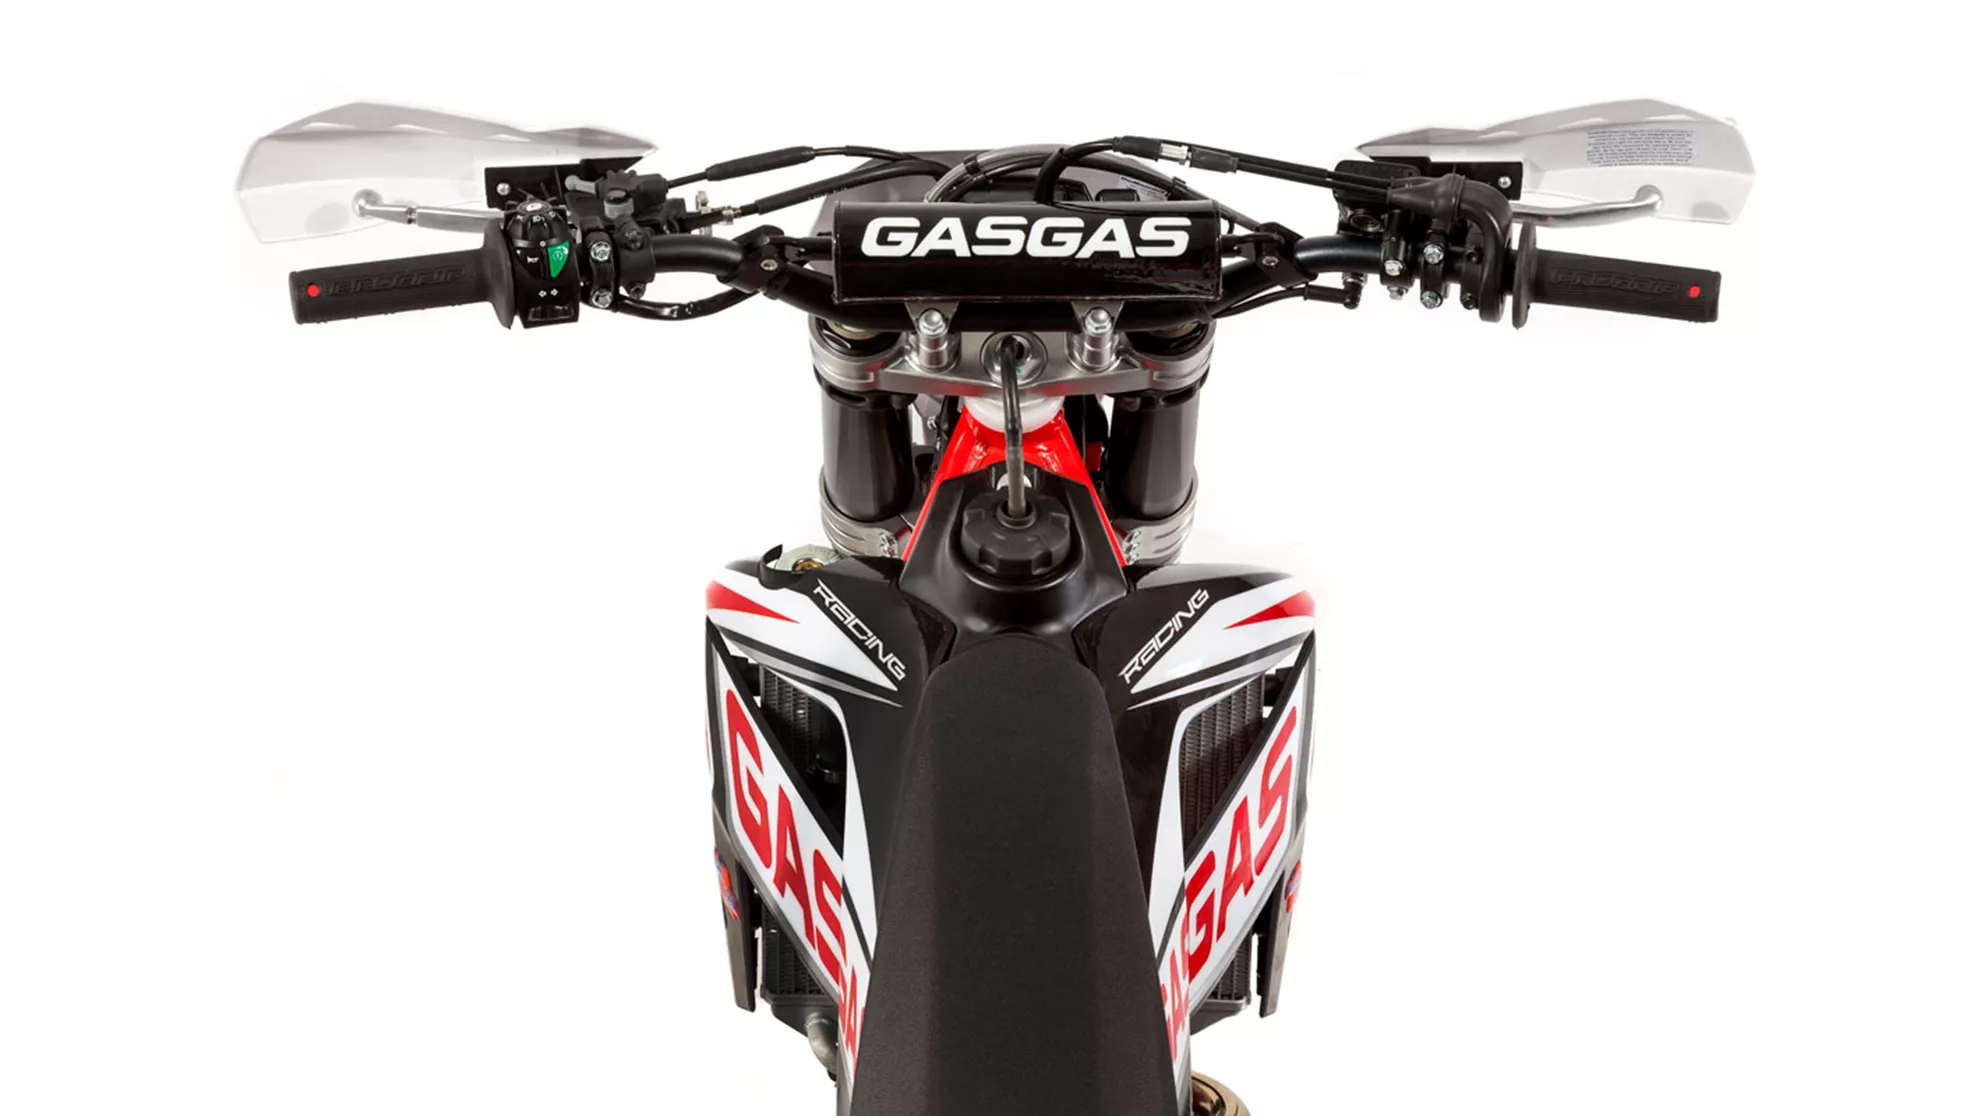 GASGAS EC 300 F Racing - Image 11